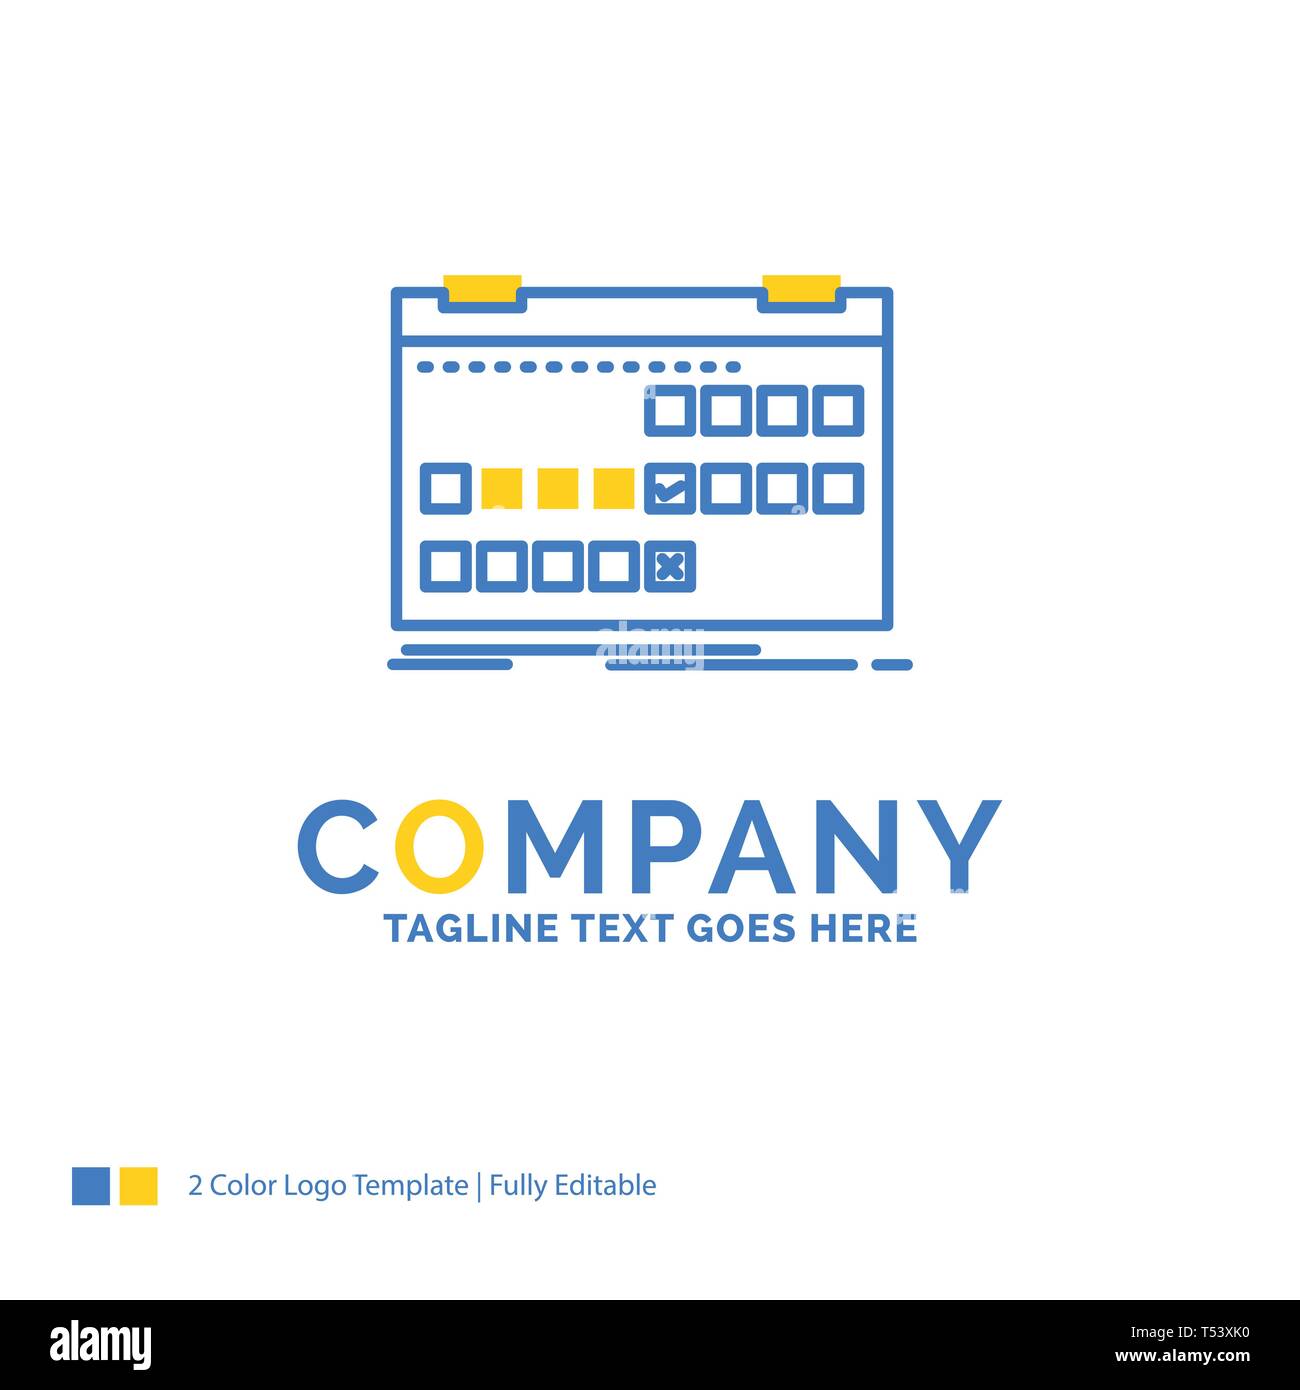 Calendar, date, event, release, schedule Blue Yellow Business Logo template. Creative Design Template Place for Tagline. Stock Vector